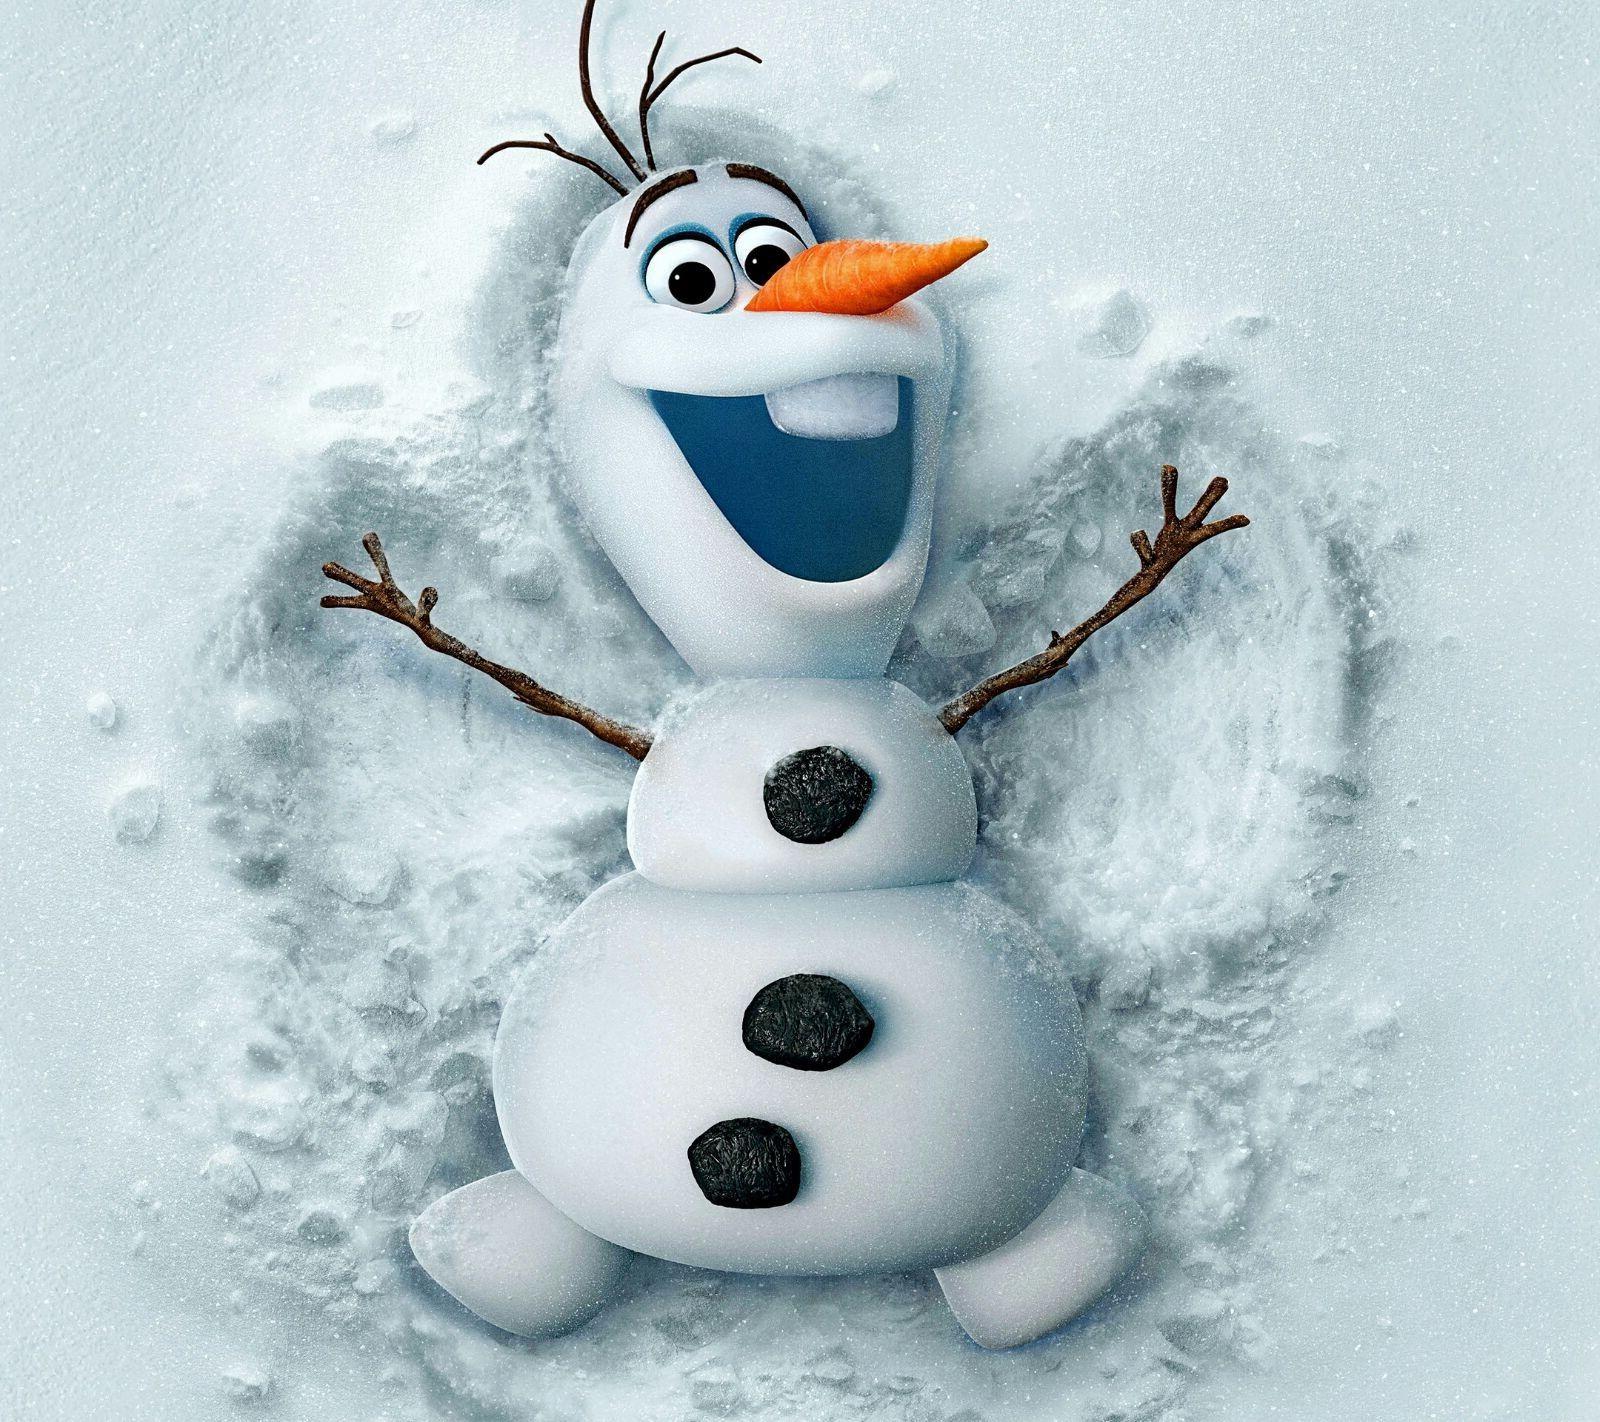 Wallpaper, illustration, snow, cartoon, Frozen movie, snowman, Olaf, ART, 1600x1422 px 1600x1422